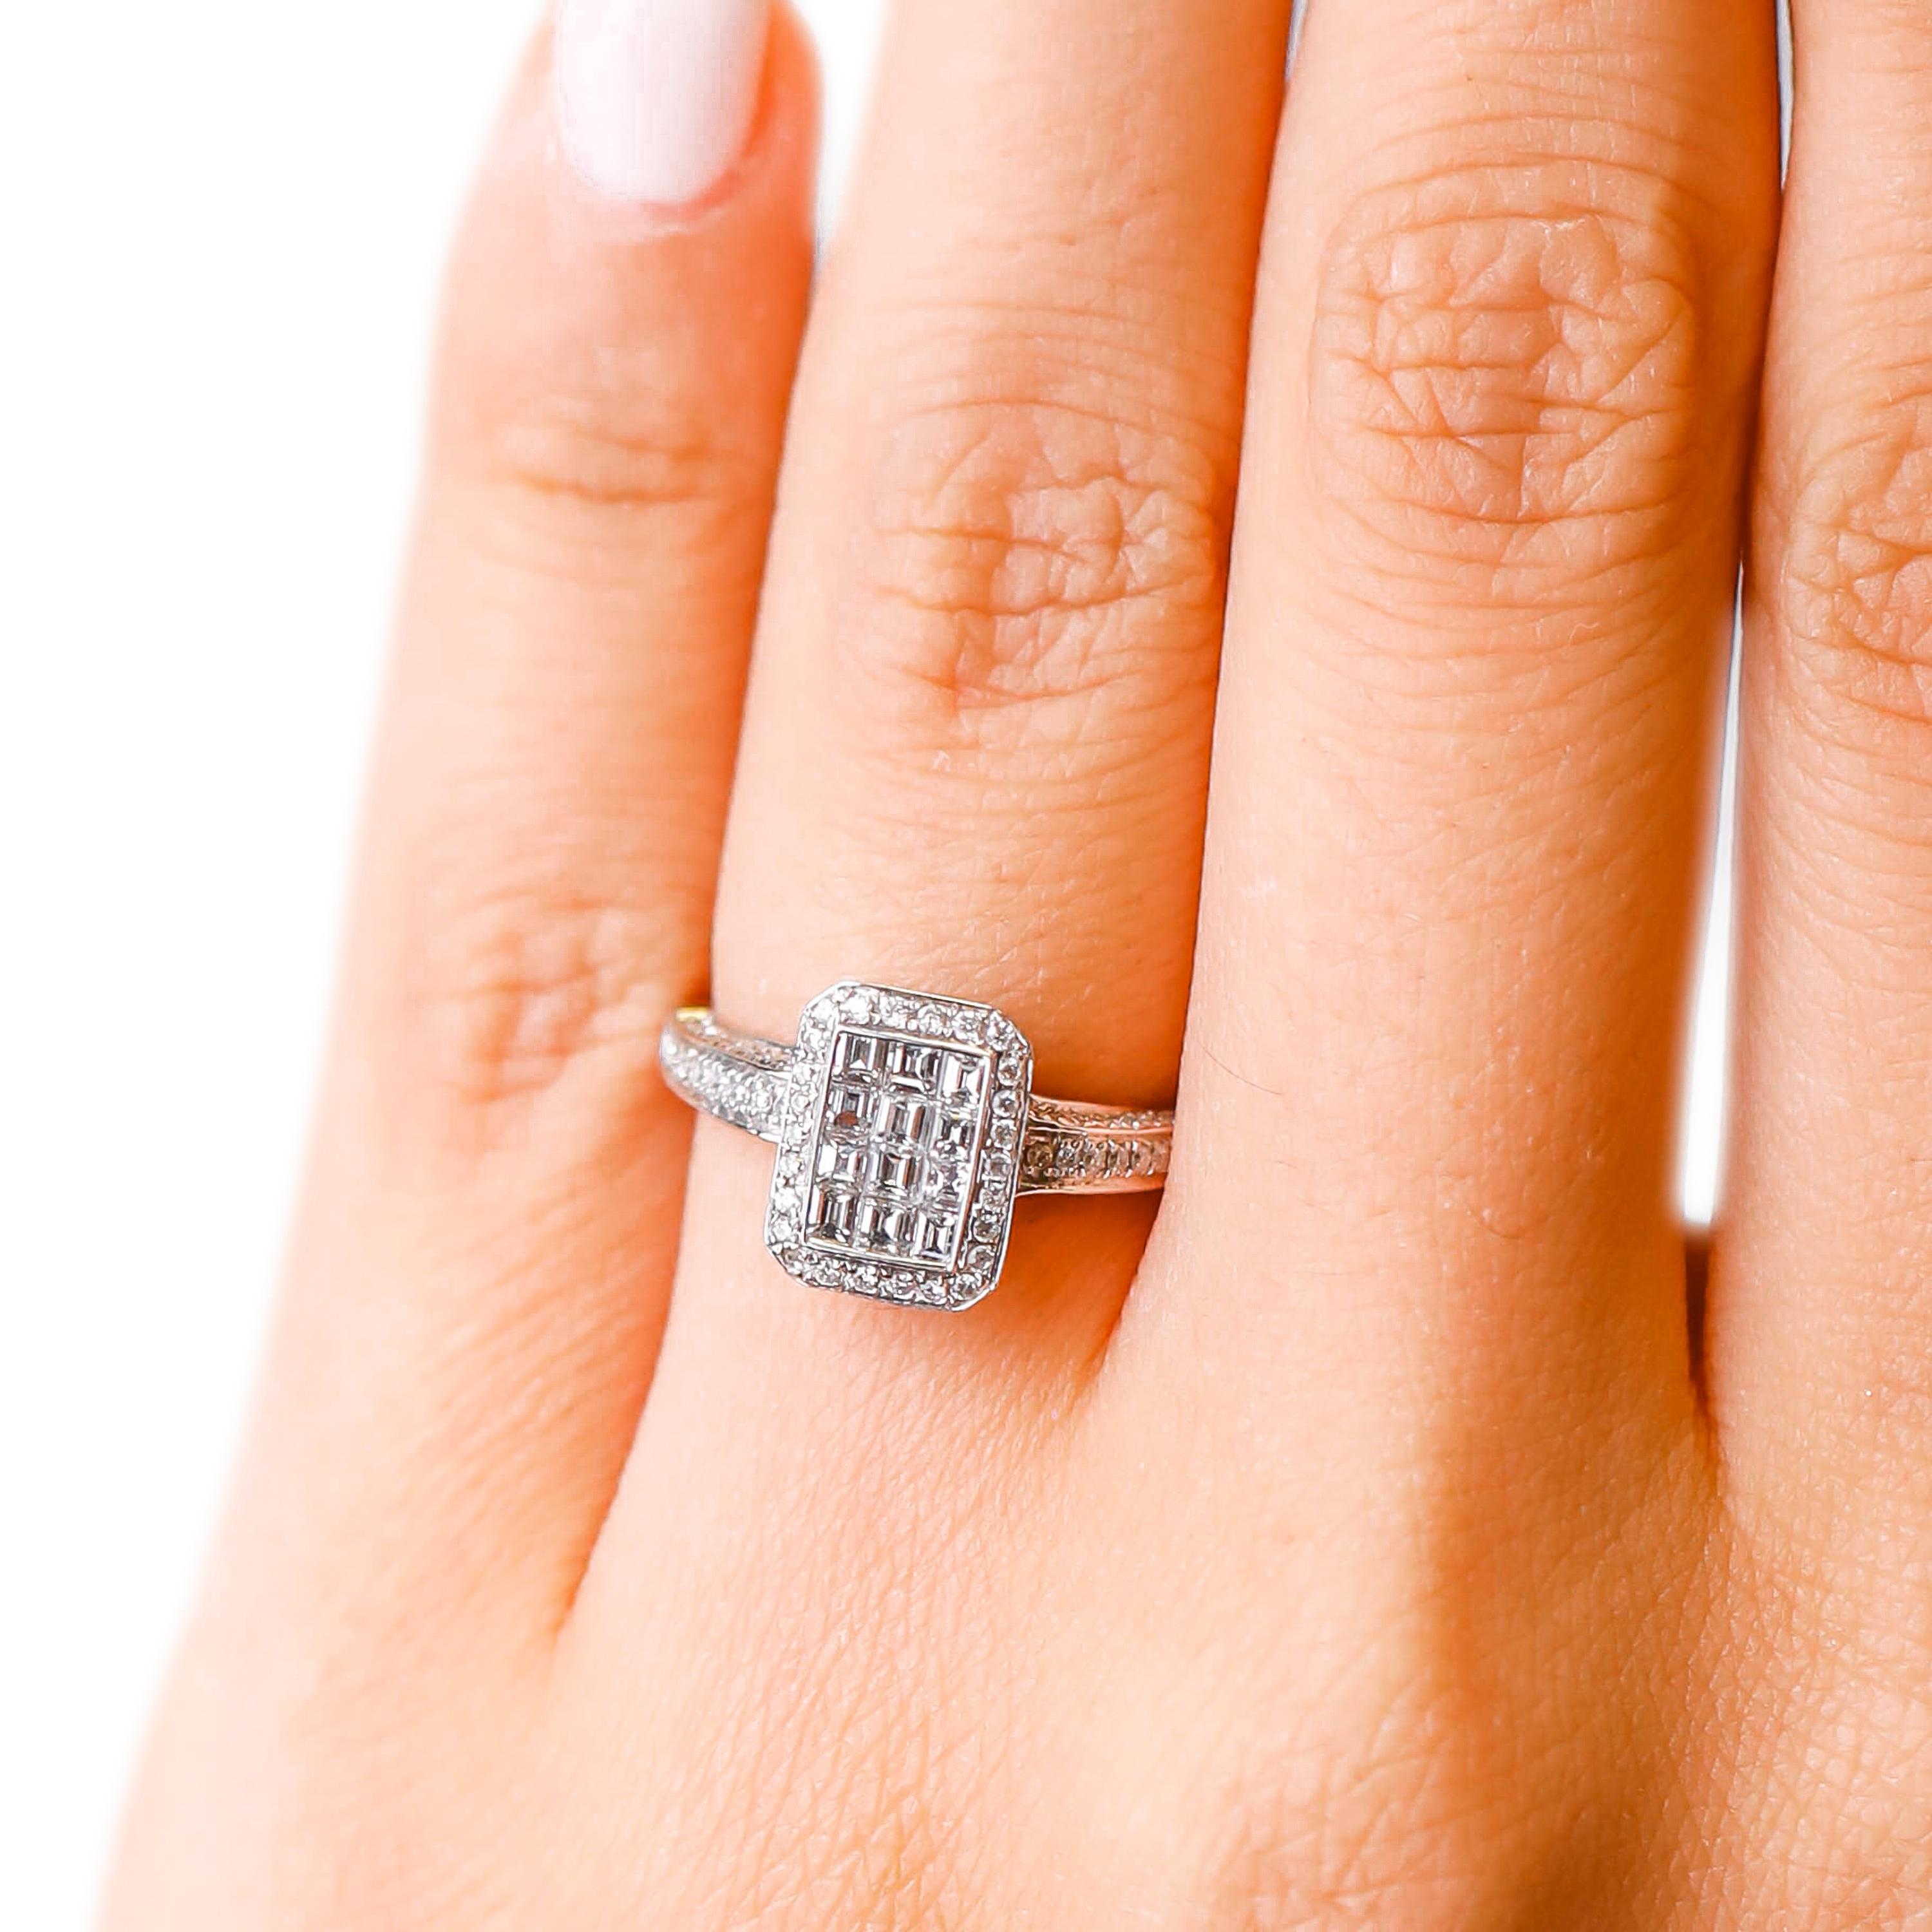 Gregg Ruth 18k White Gold 1.0 Carat Princess Cut Diamond Engagement Ring Sz 6.5 For Sale 2